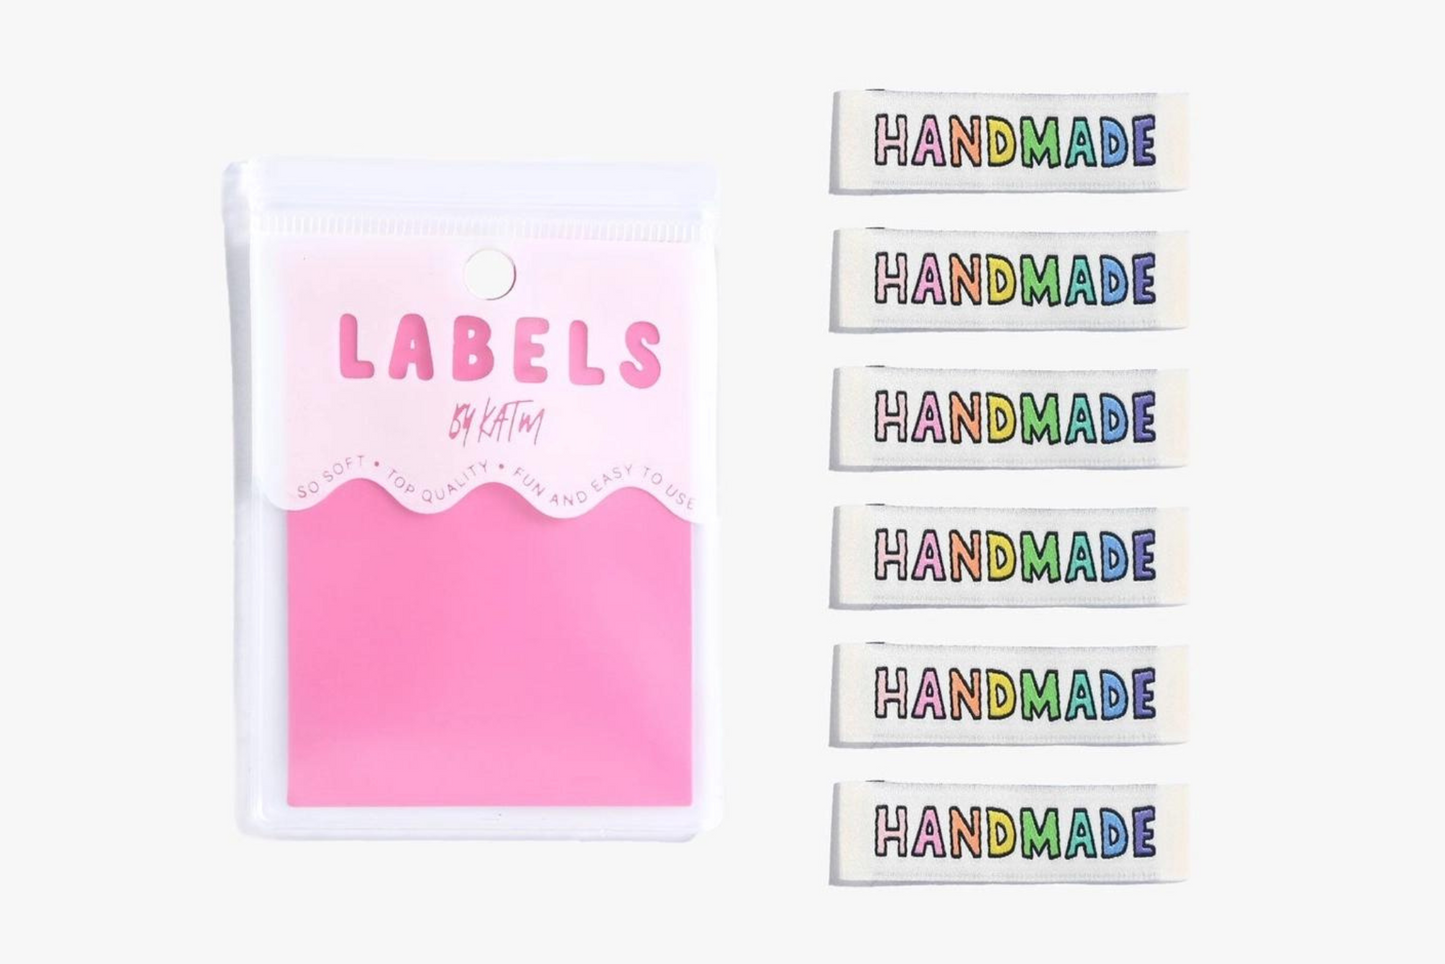 Handmade // Woven labels (6 pk)